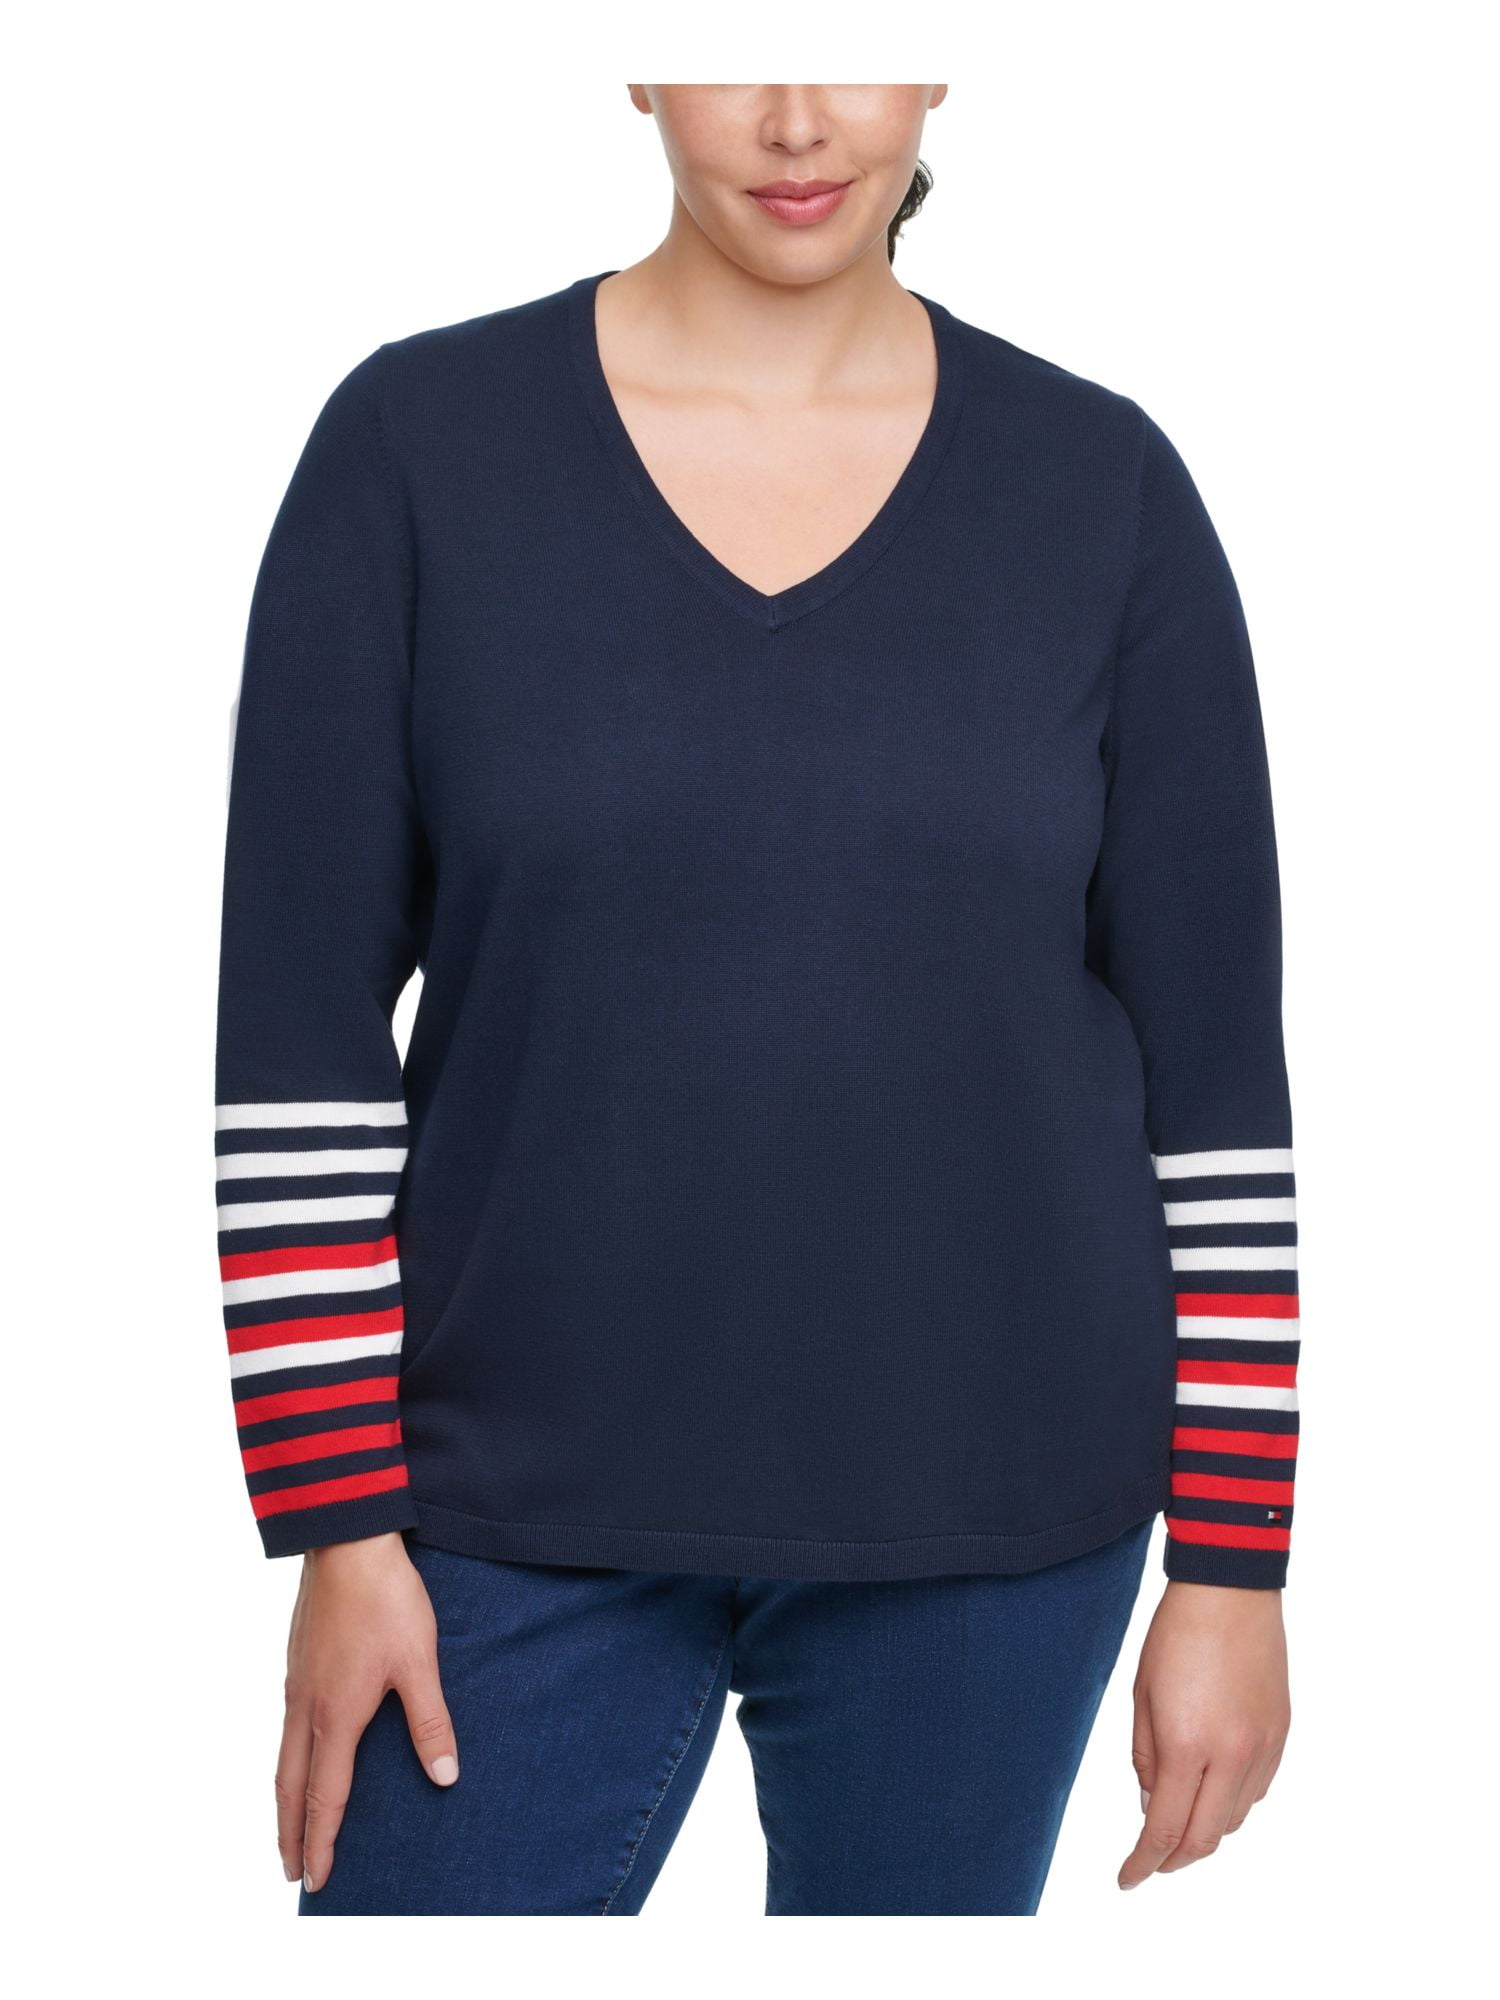 TOMMY HILFIGER Womens Navy Long Sleeve V Neck Sweater Plus Size: 0X -  Walmart.com